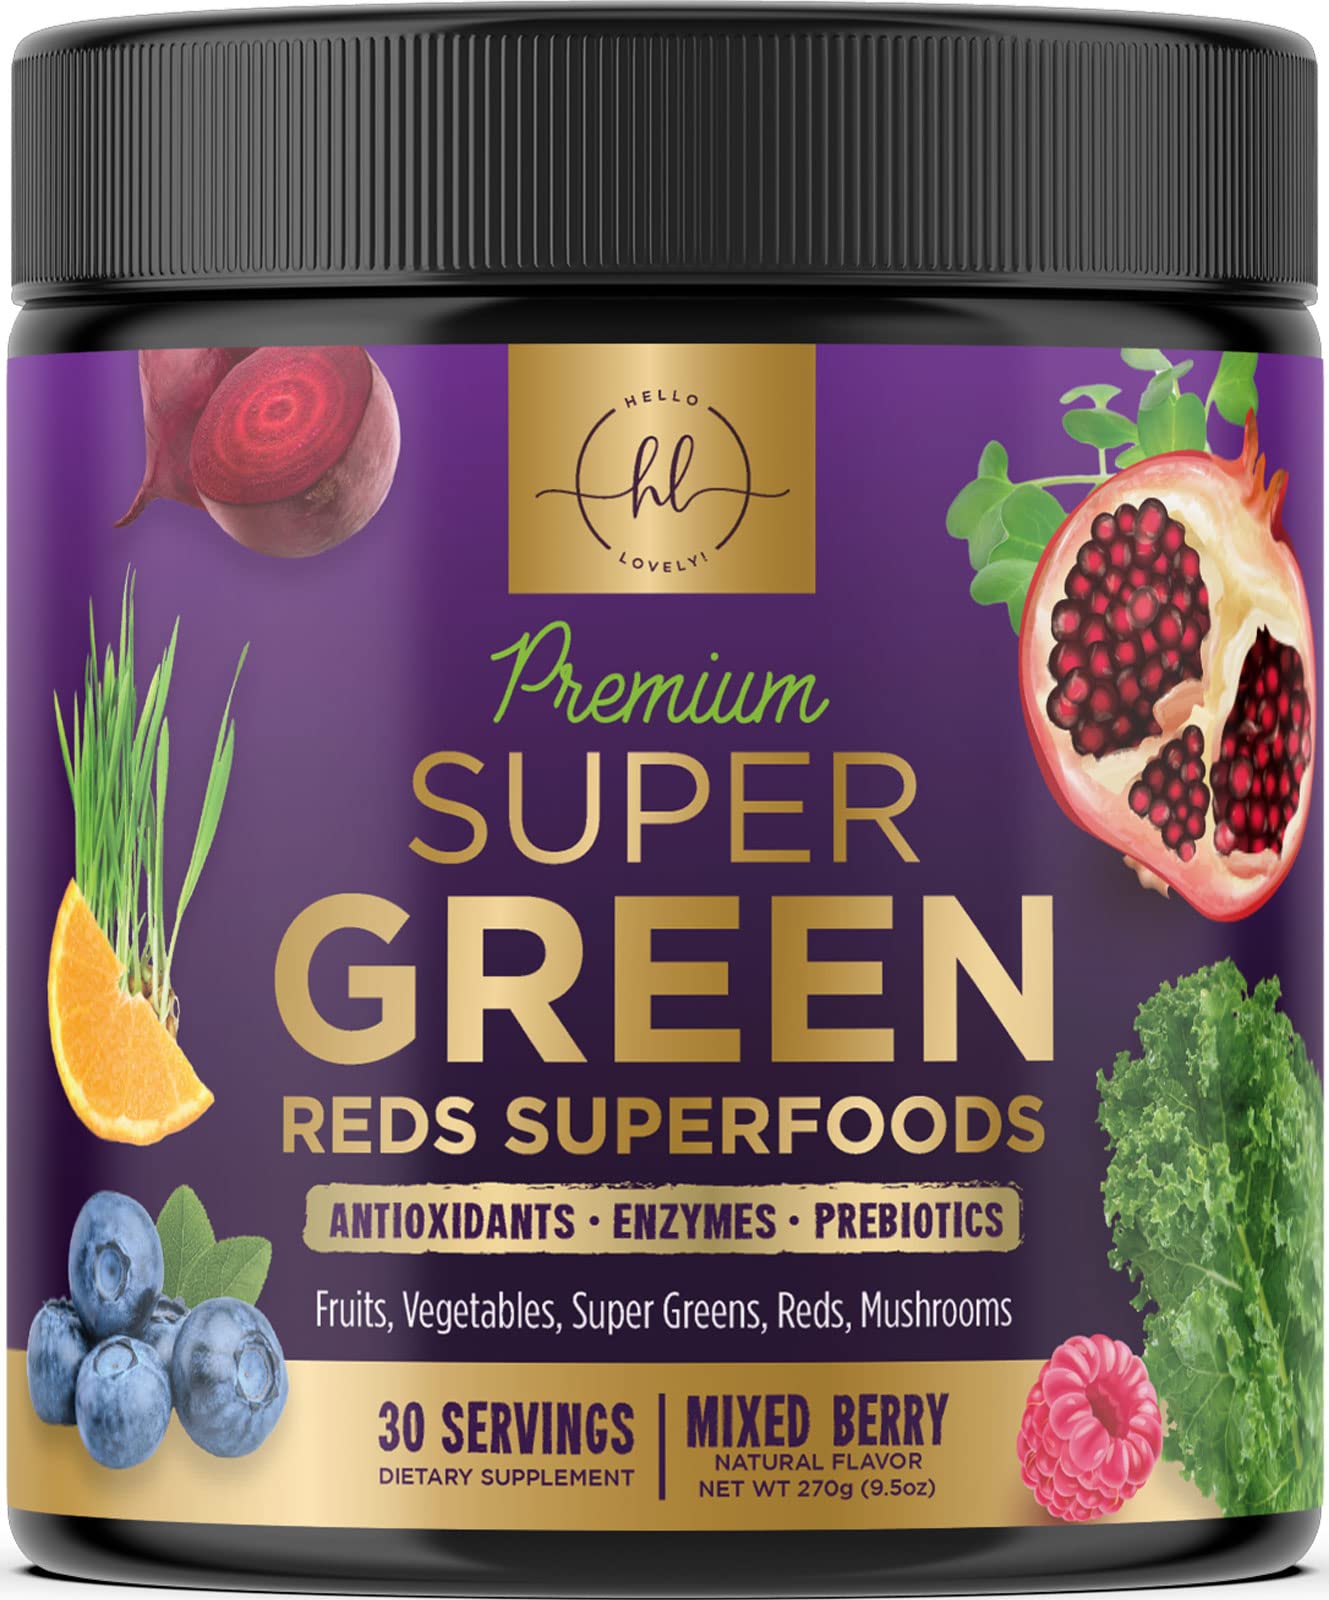 Plexus Greens Antioxidant Superfood Blend And Hand Mixer